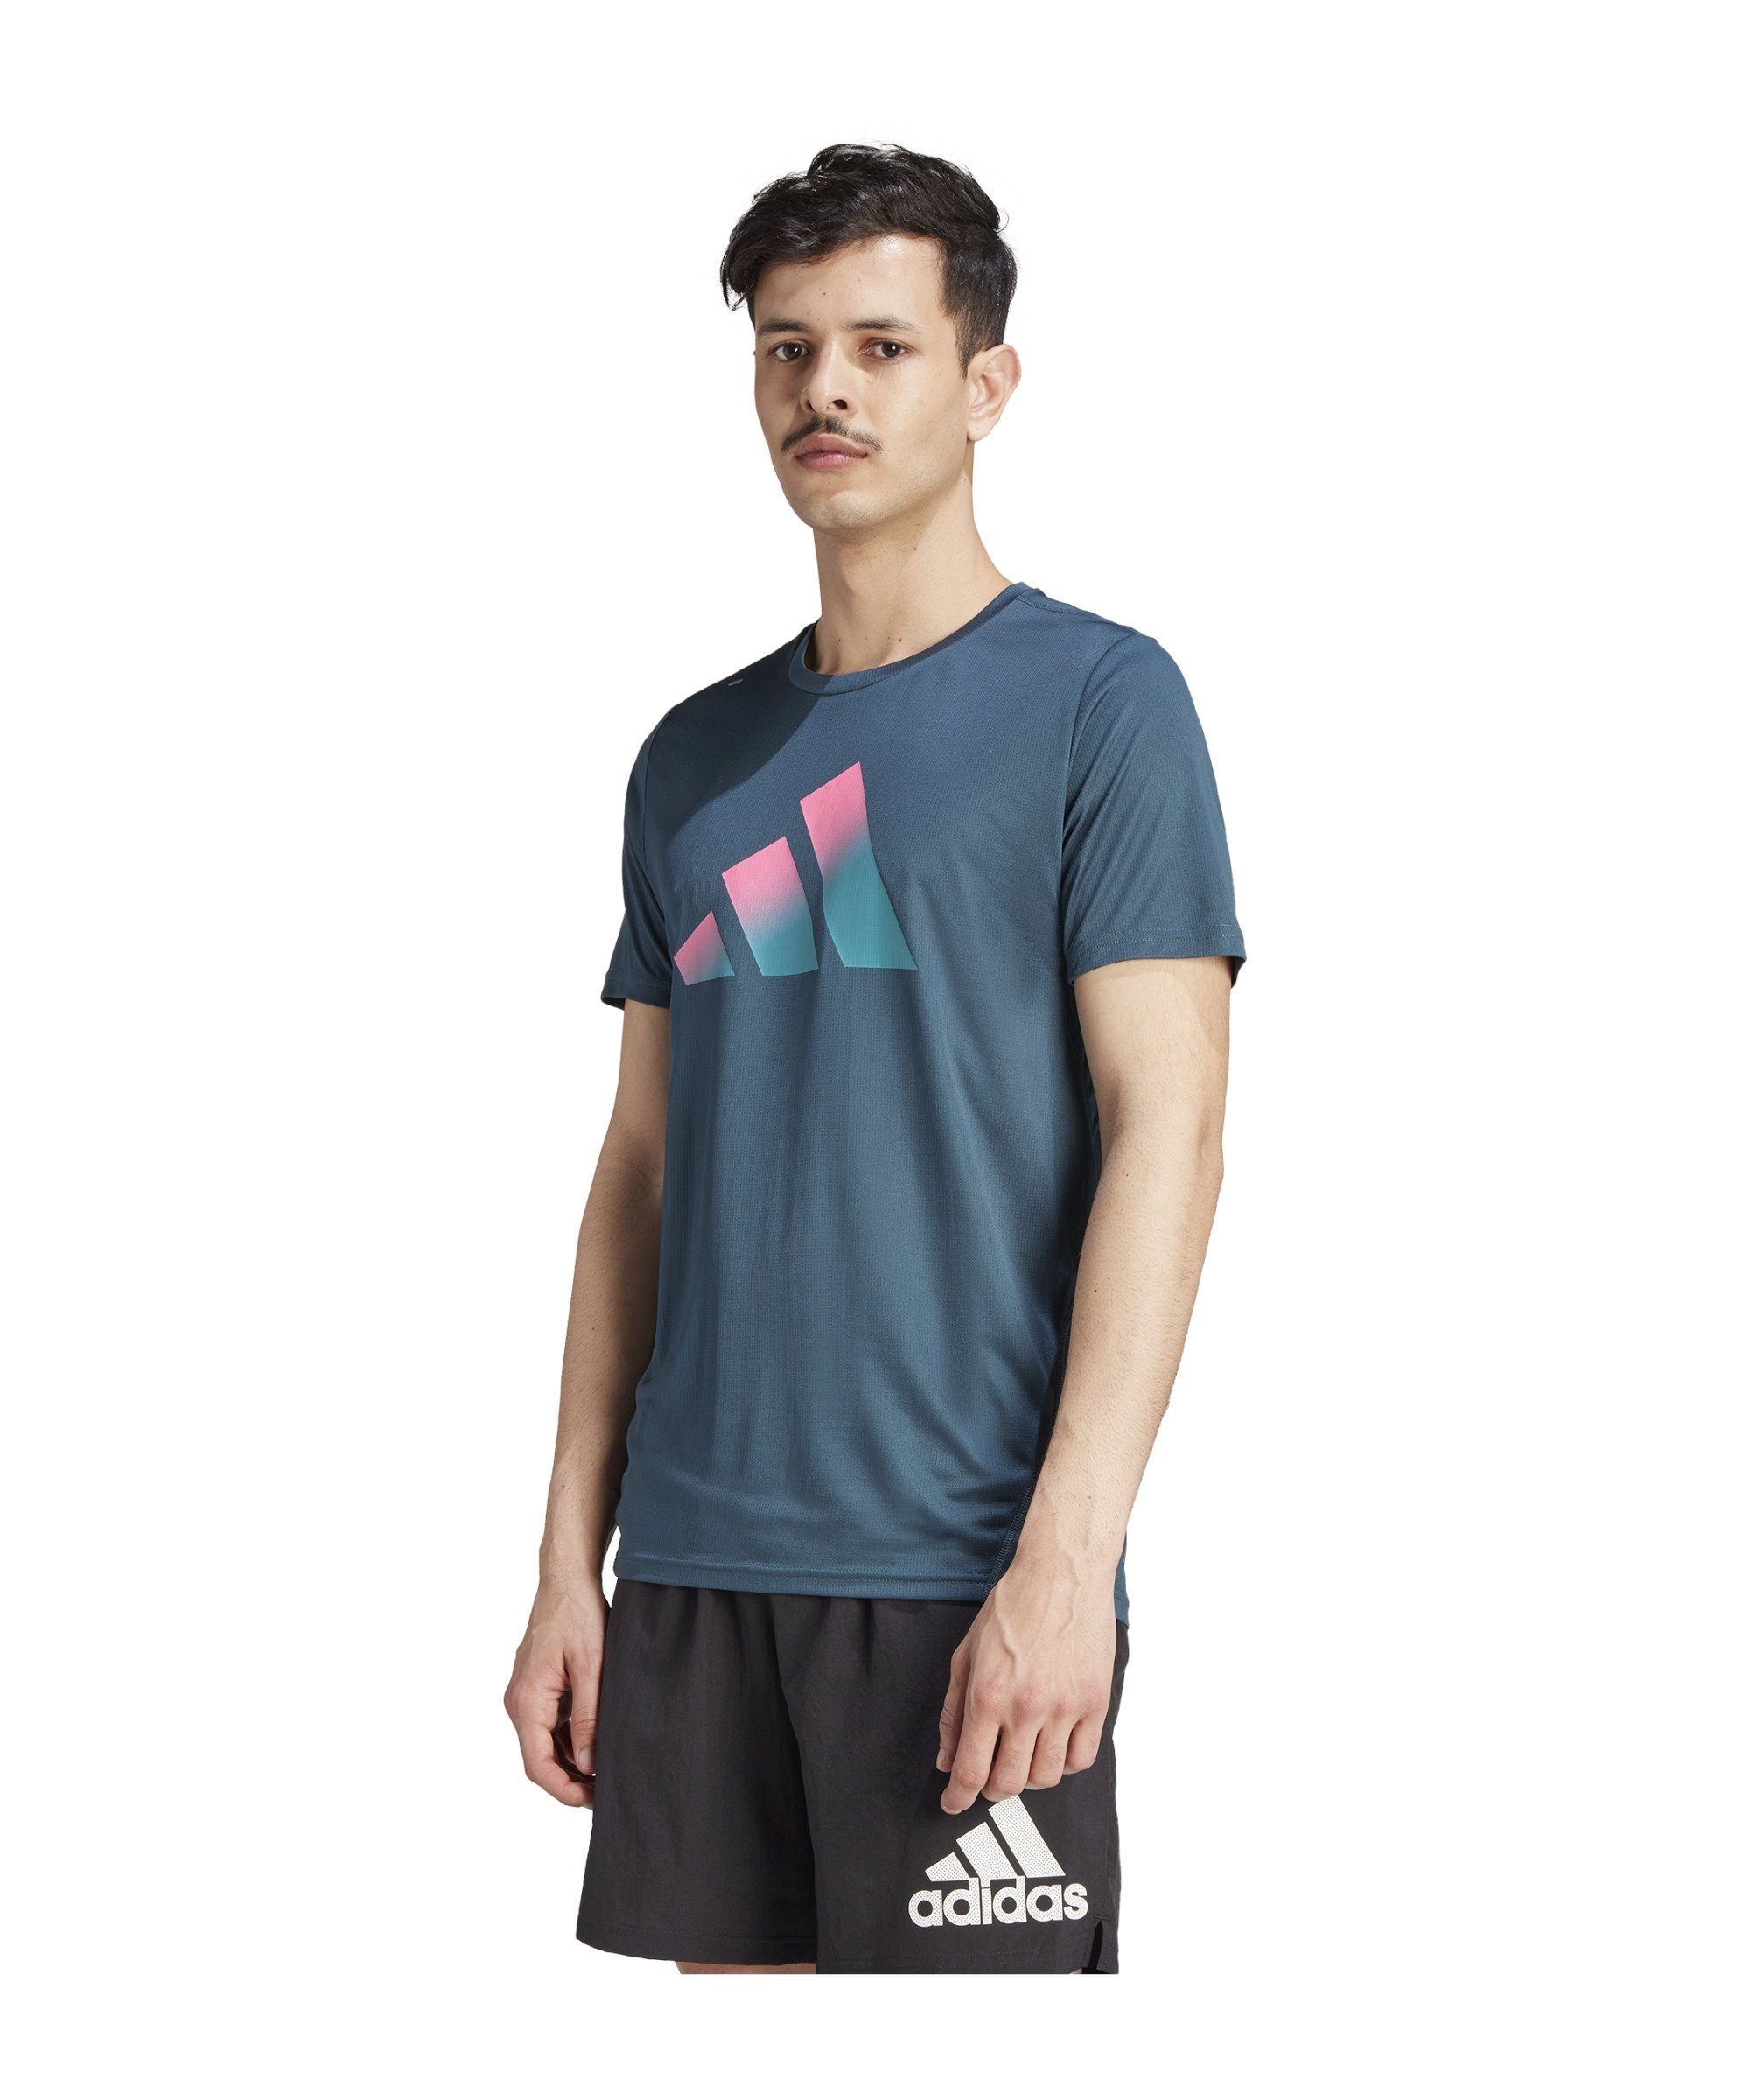 Performance Run Icons default T-Shirt 3Bar T-Shirt adidas